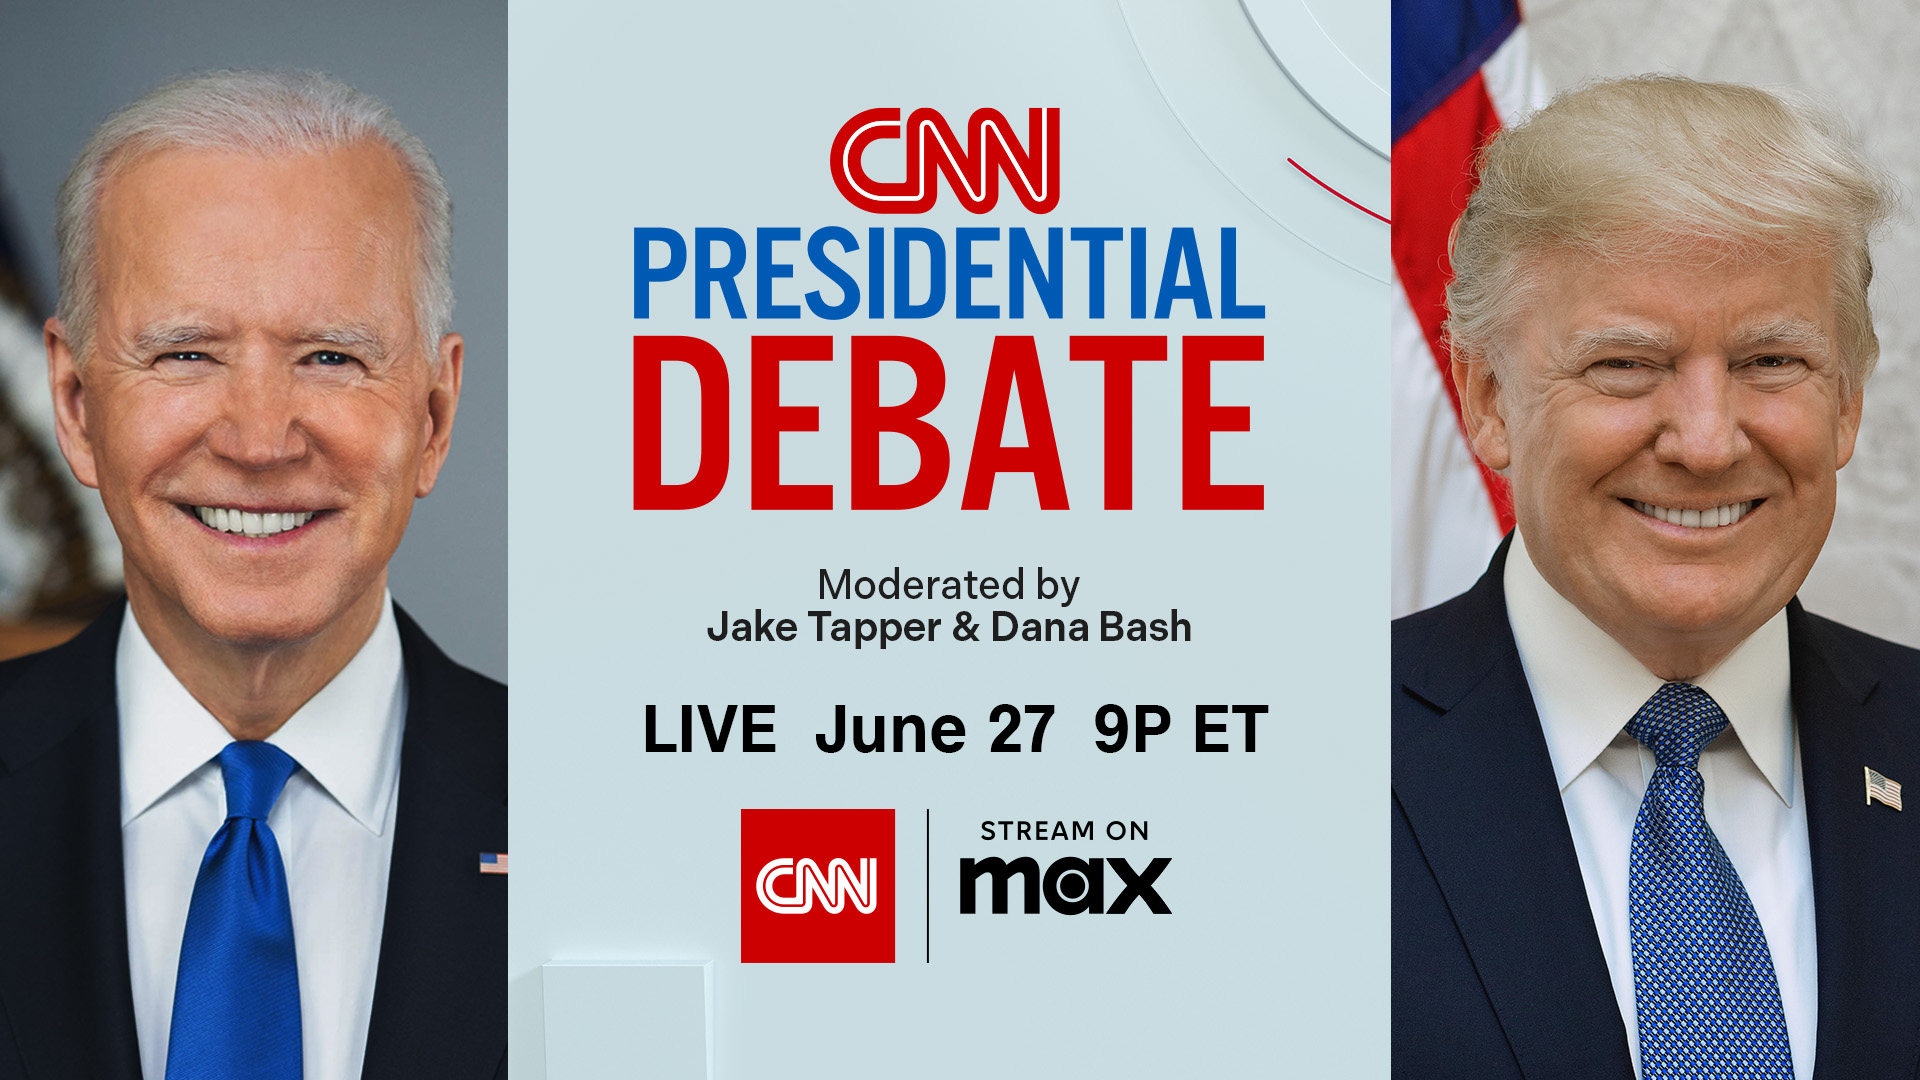 CNN Presidential Debate Live Jun 27 at 9pm ET